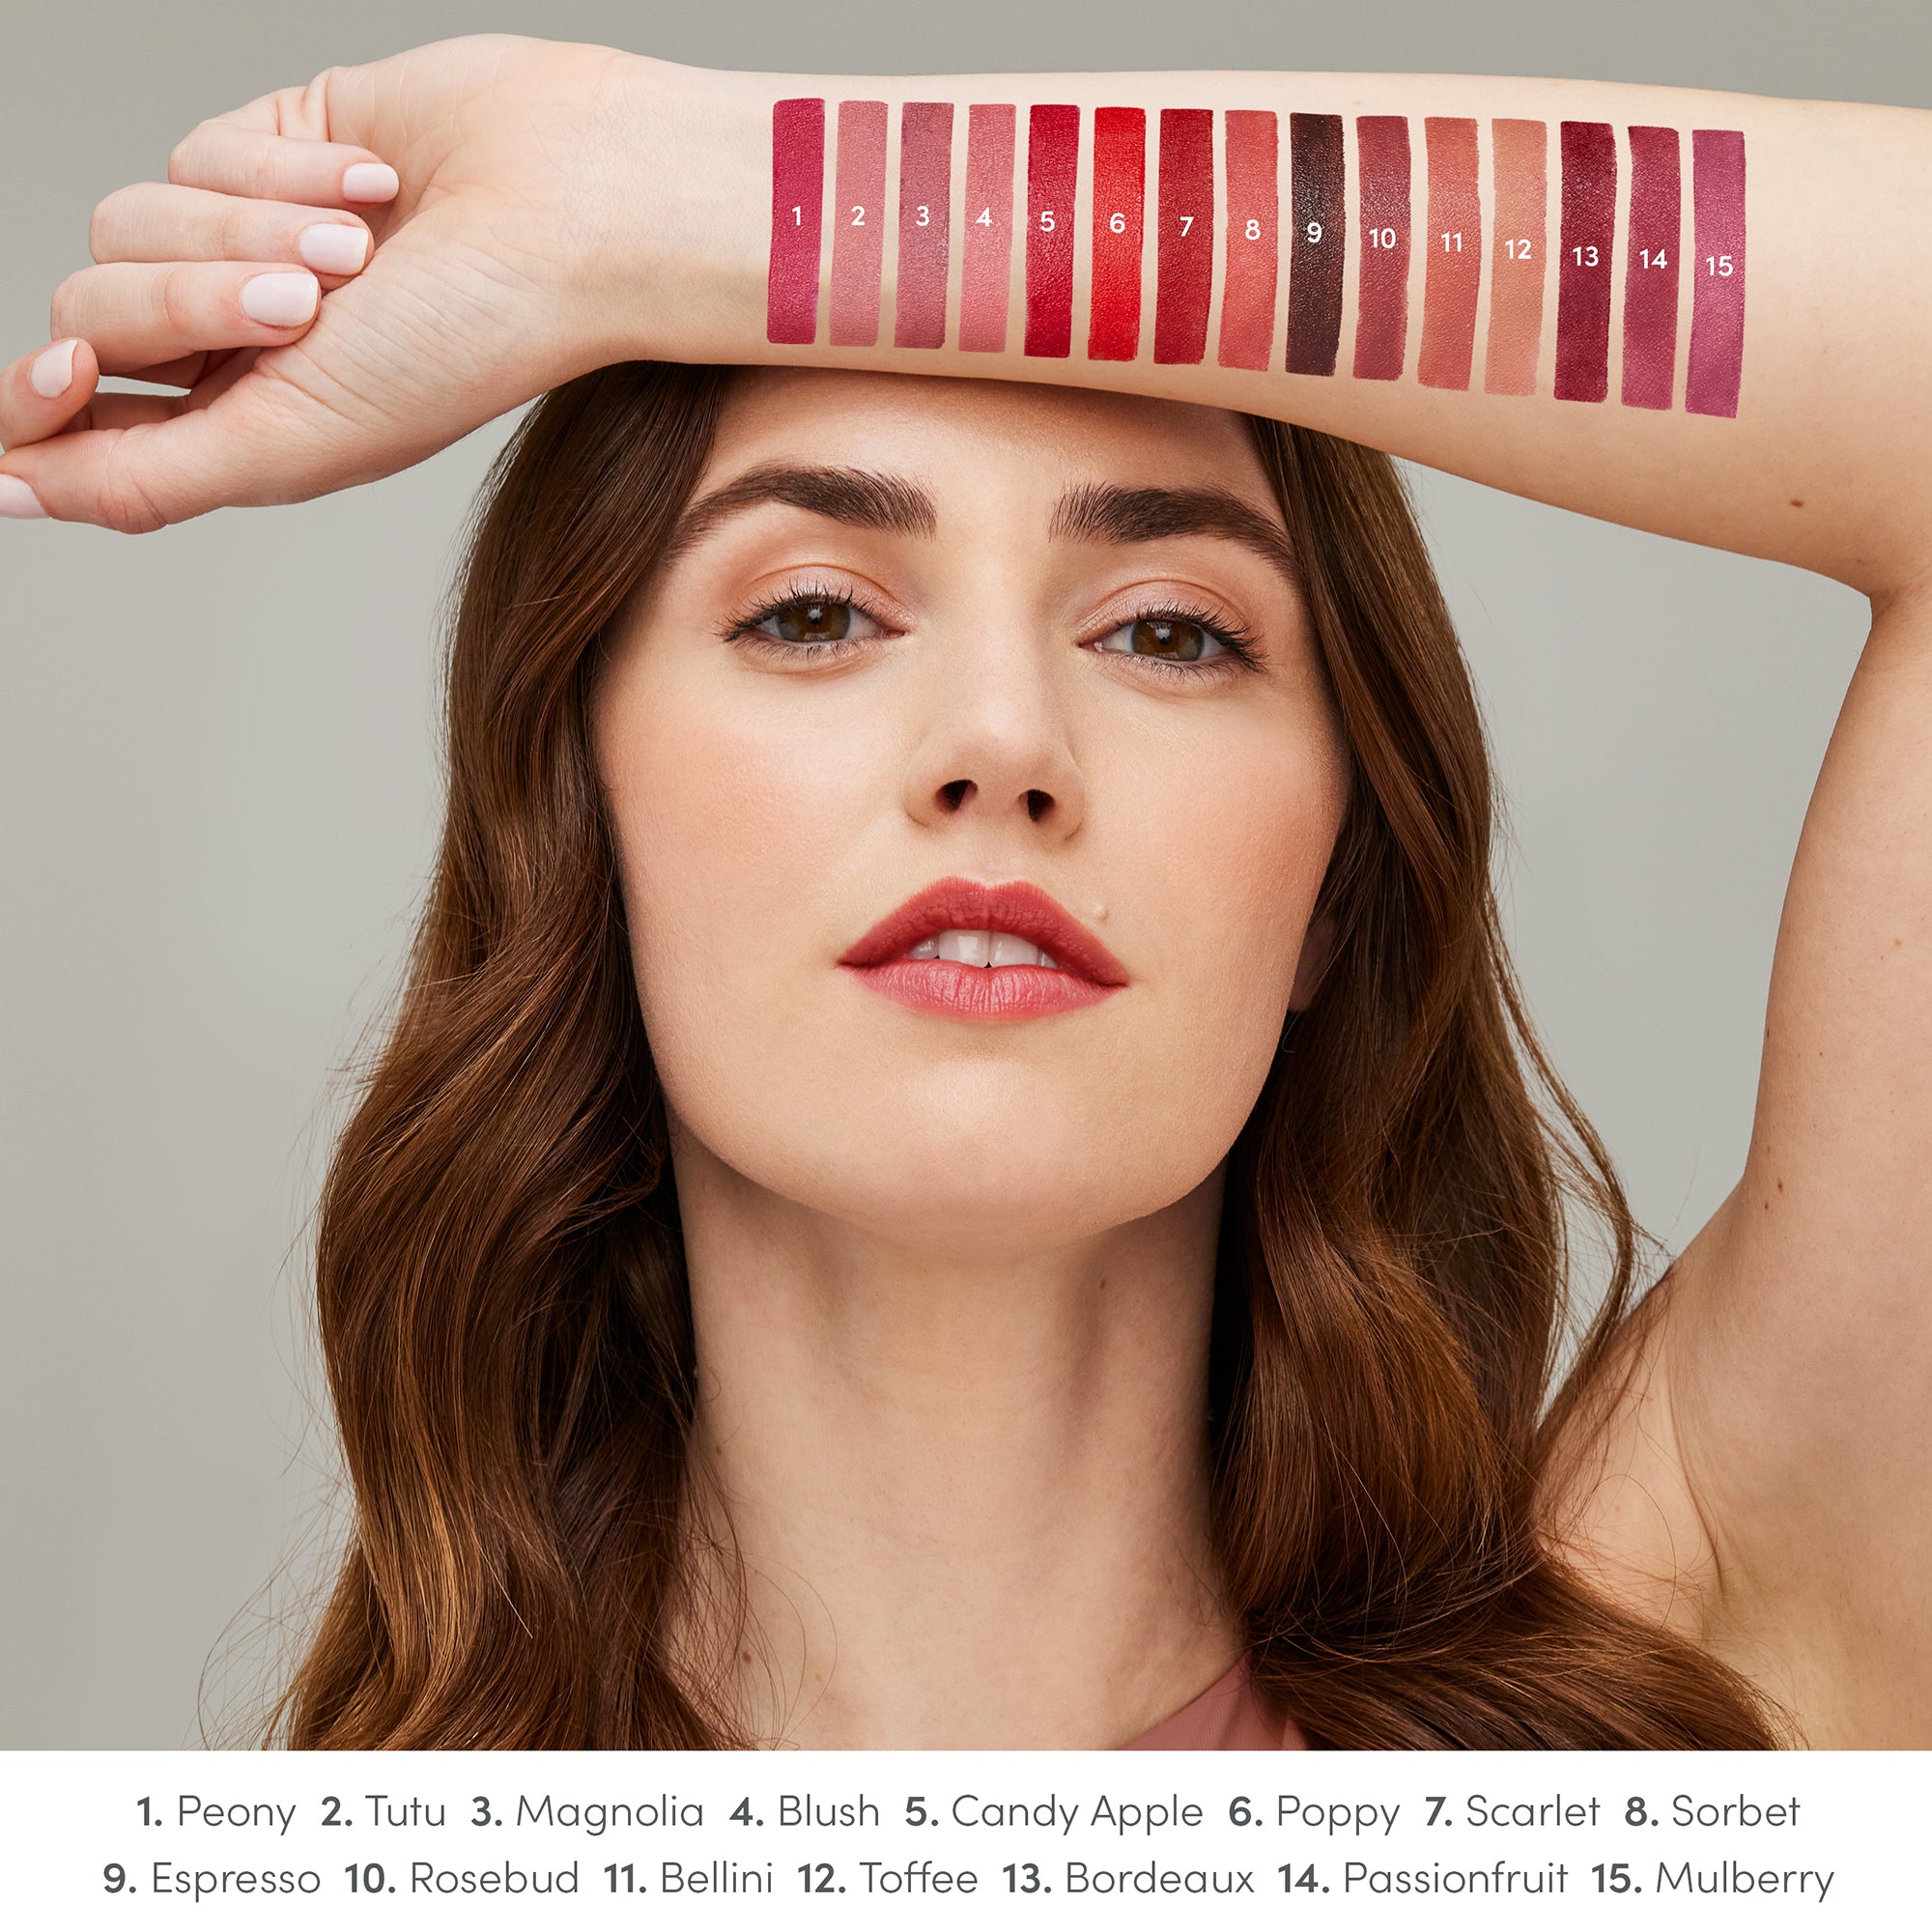 Jane Iredale ColorLuxe Hydrating Cream Lipstick / BLUSH